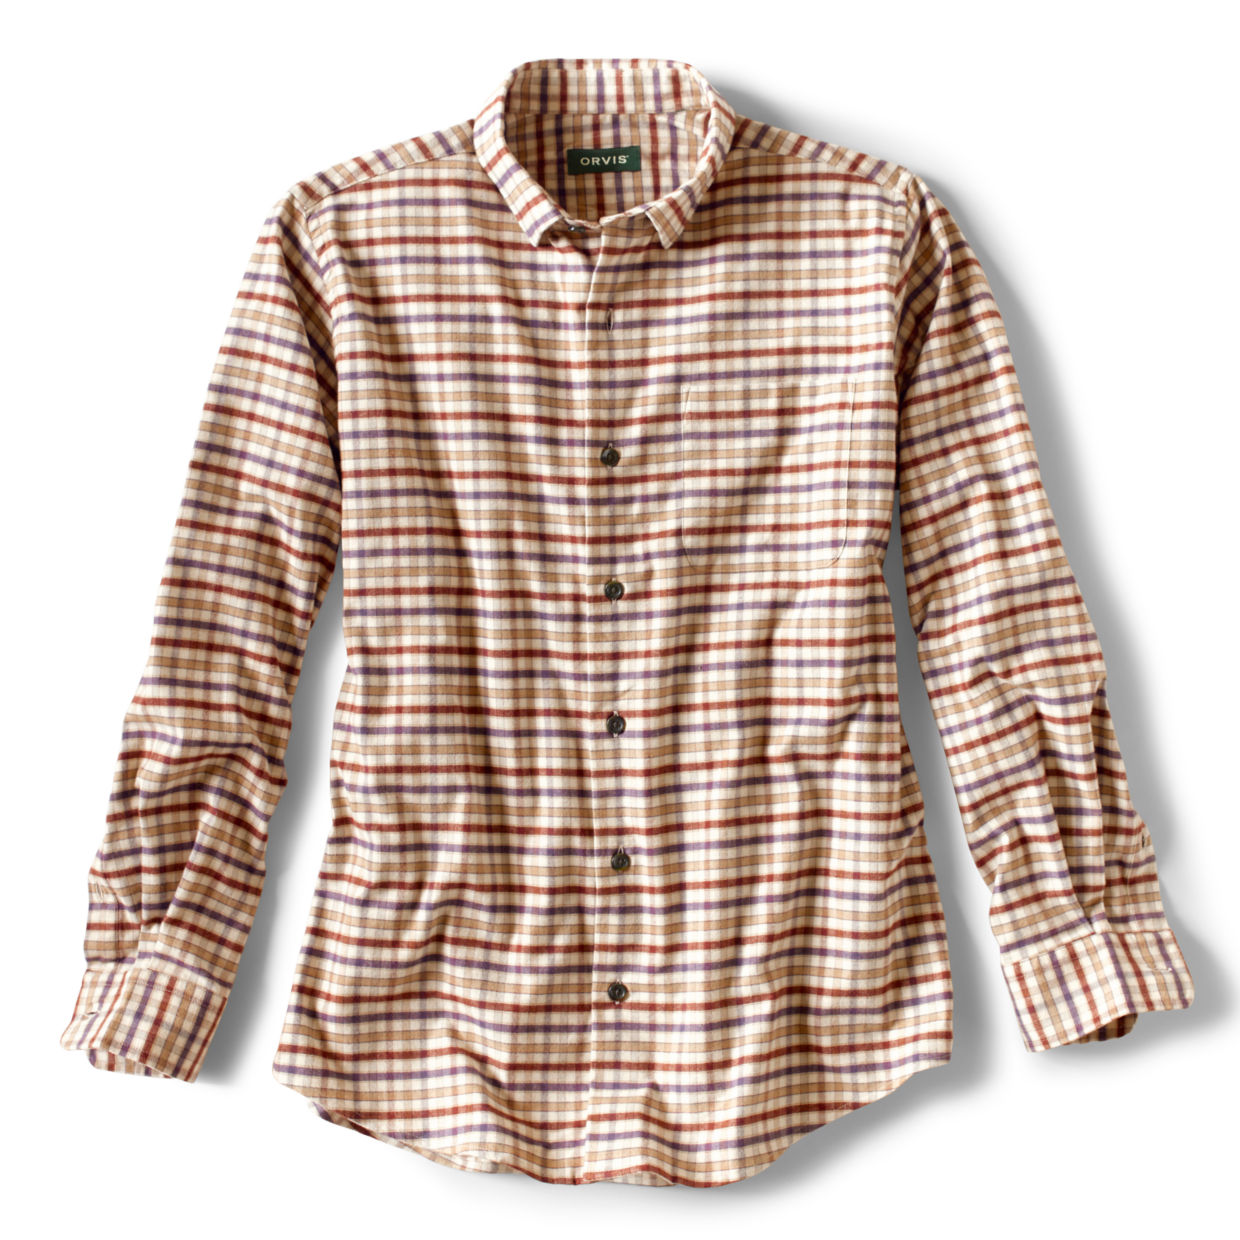 Cotton/Merino Performance Long-Sleeved Shirt - Regular